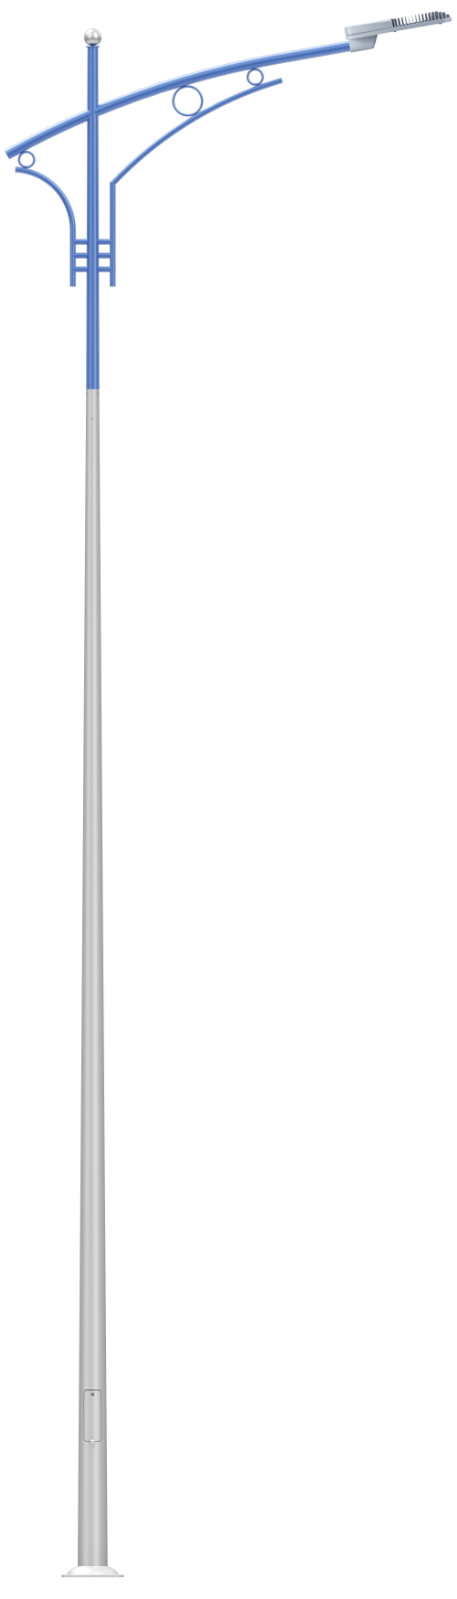 Lighting Pole LG01